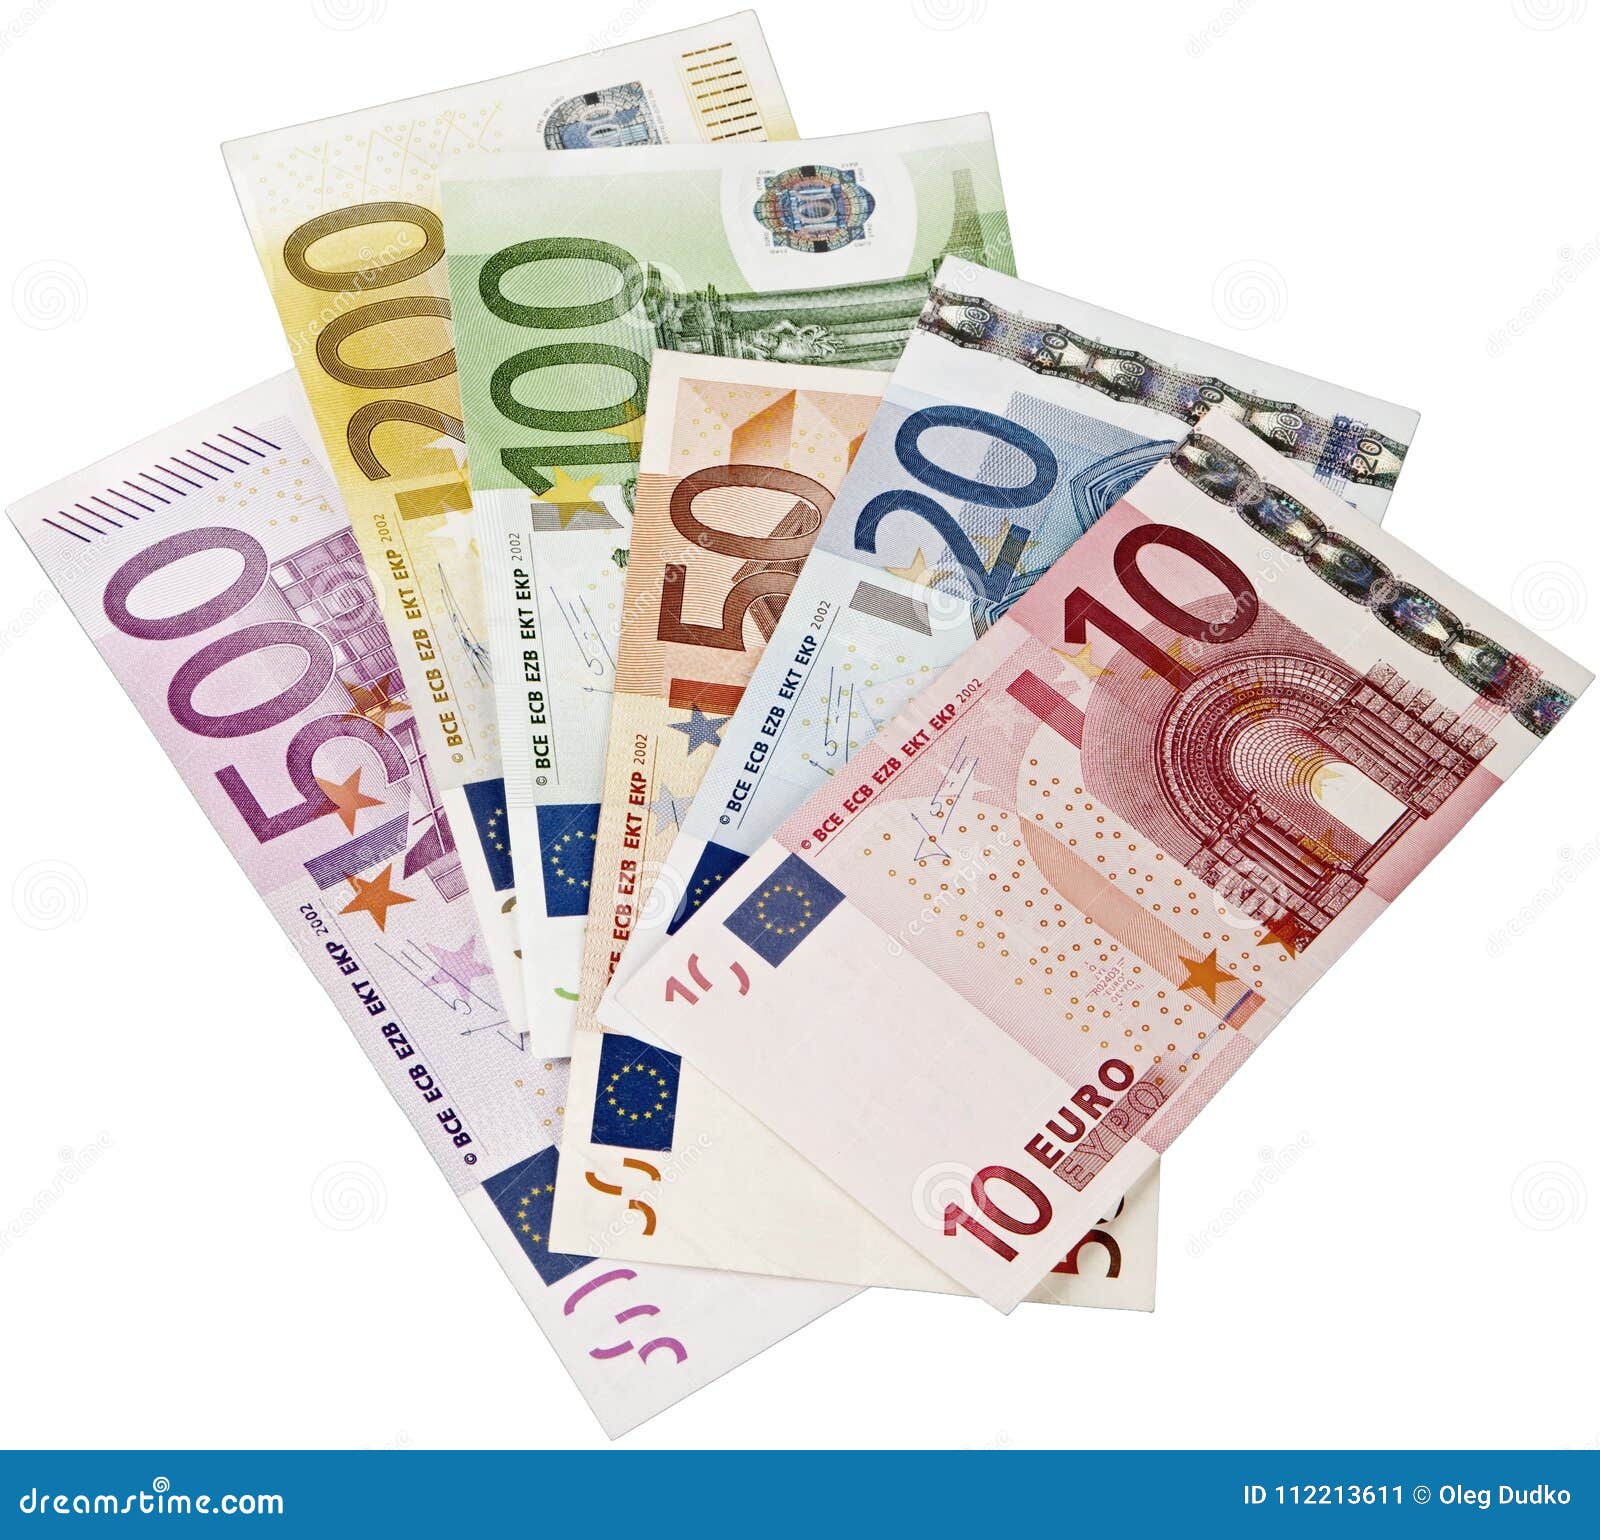 Иностранная валюта евро. Деньги евро. Банкноты евро. Евро без фона. Евро на белом фоне.